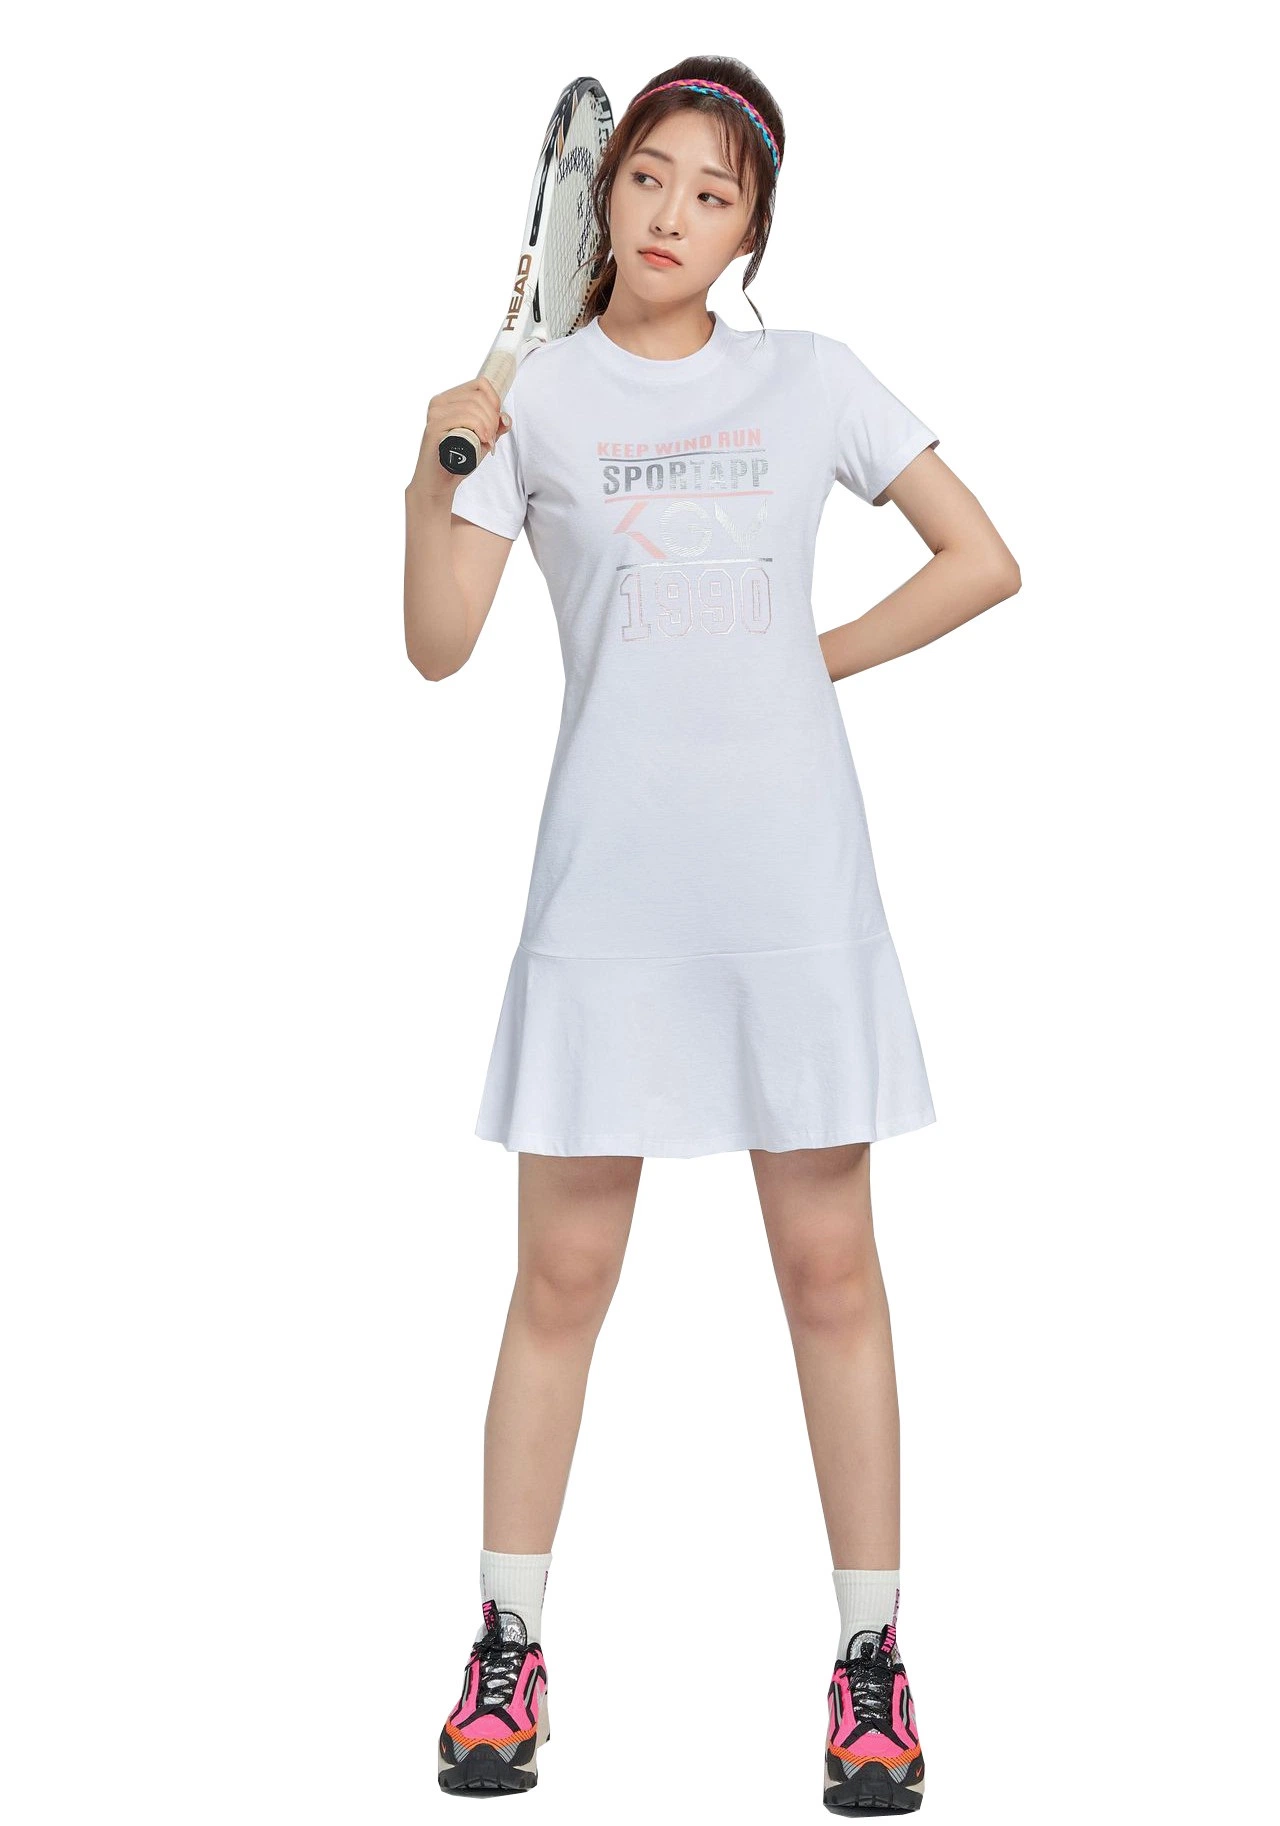 Women Fitness Clothing Golf/Tennis Sportswear Pullover Shirt Workout Gym Yoga Wear